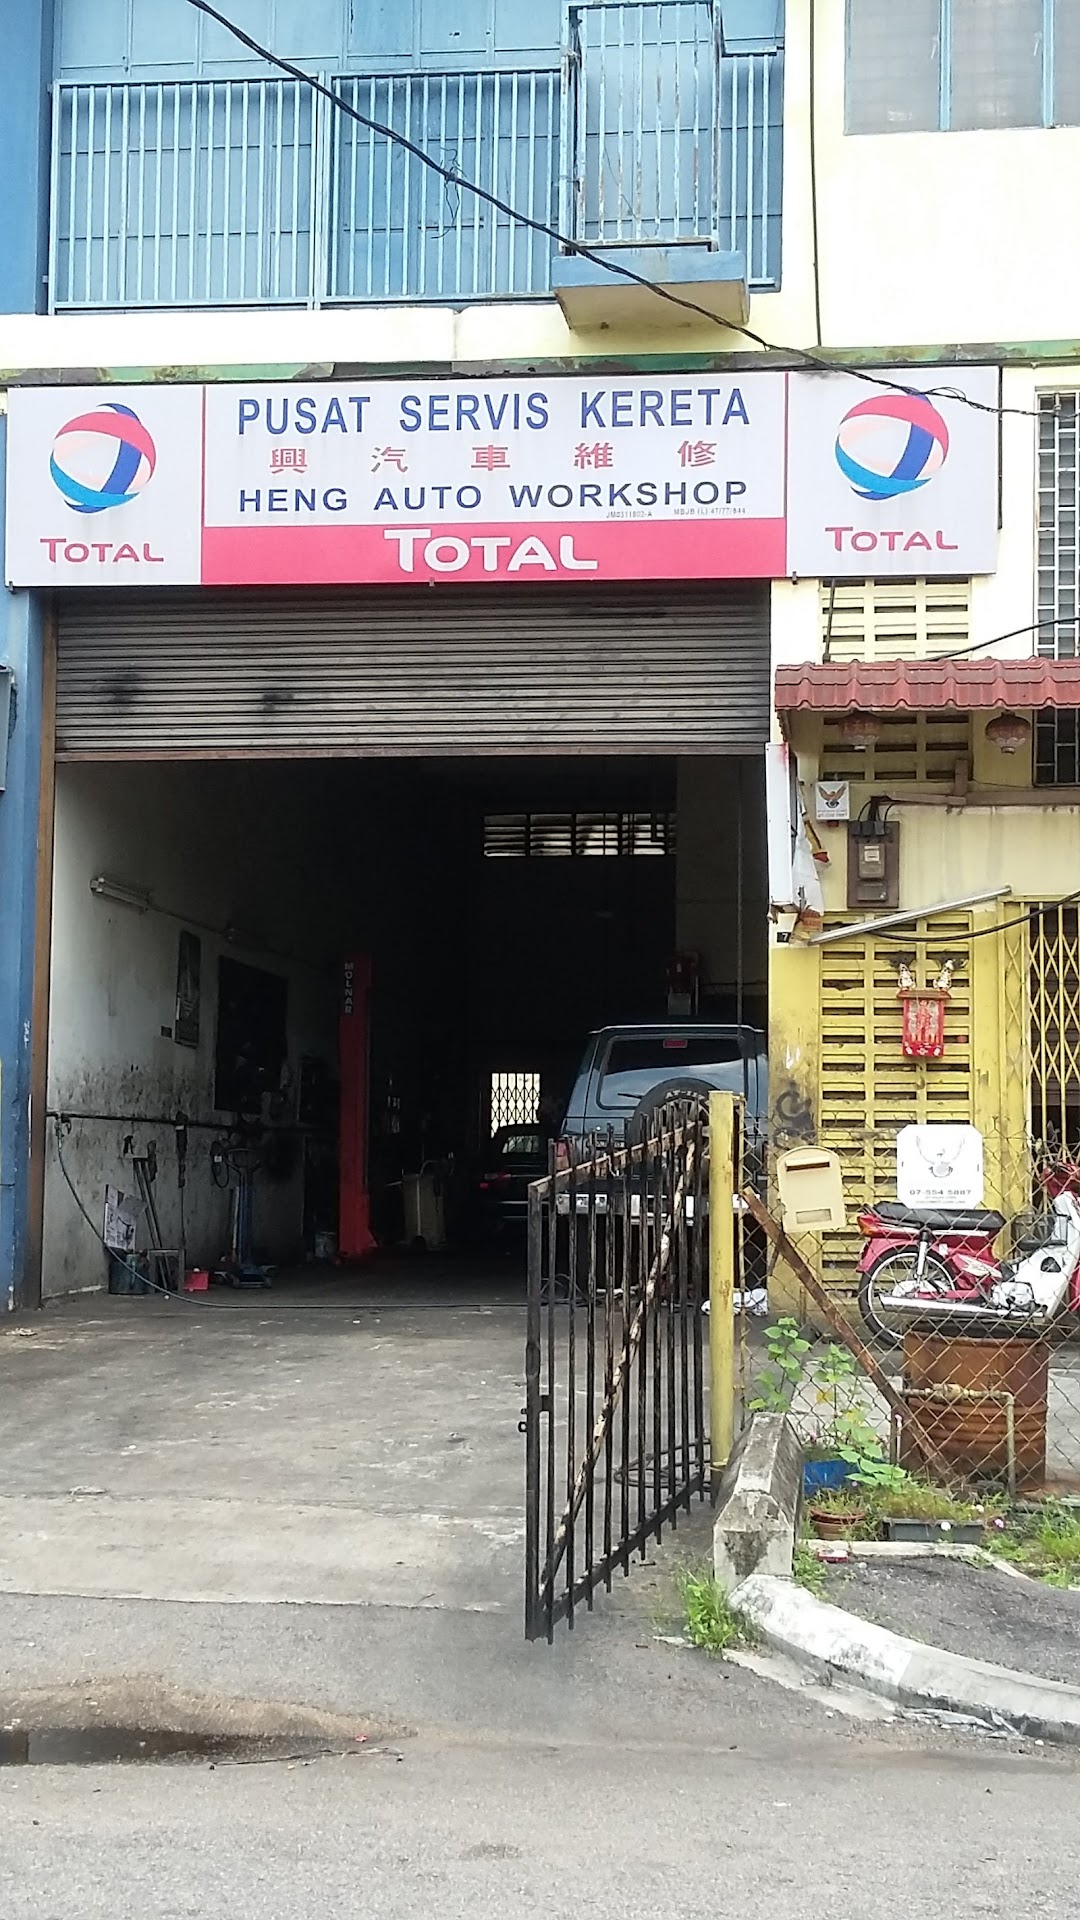 Heng Auto Workshop